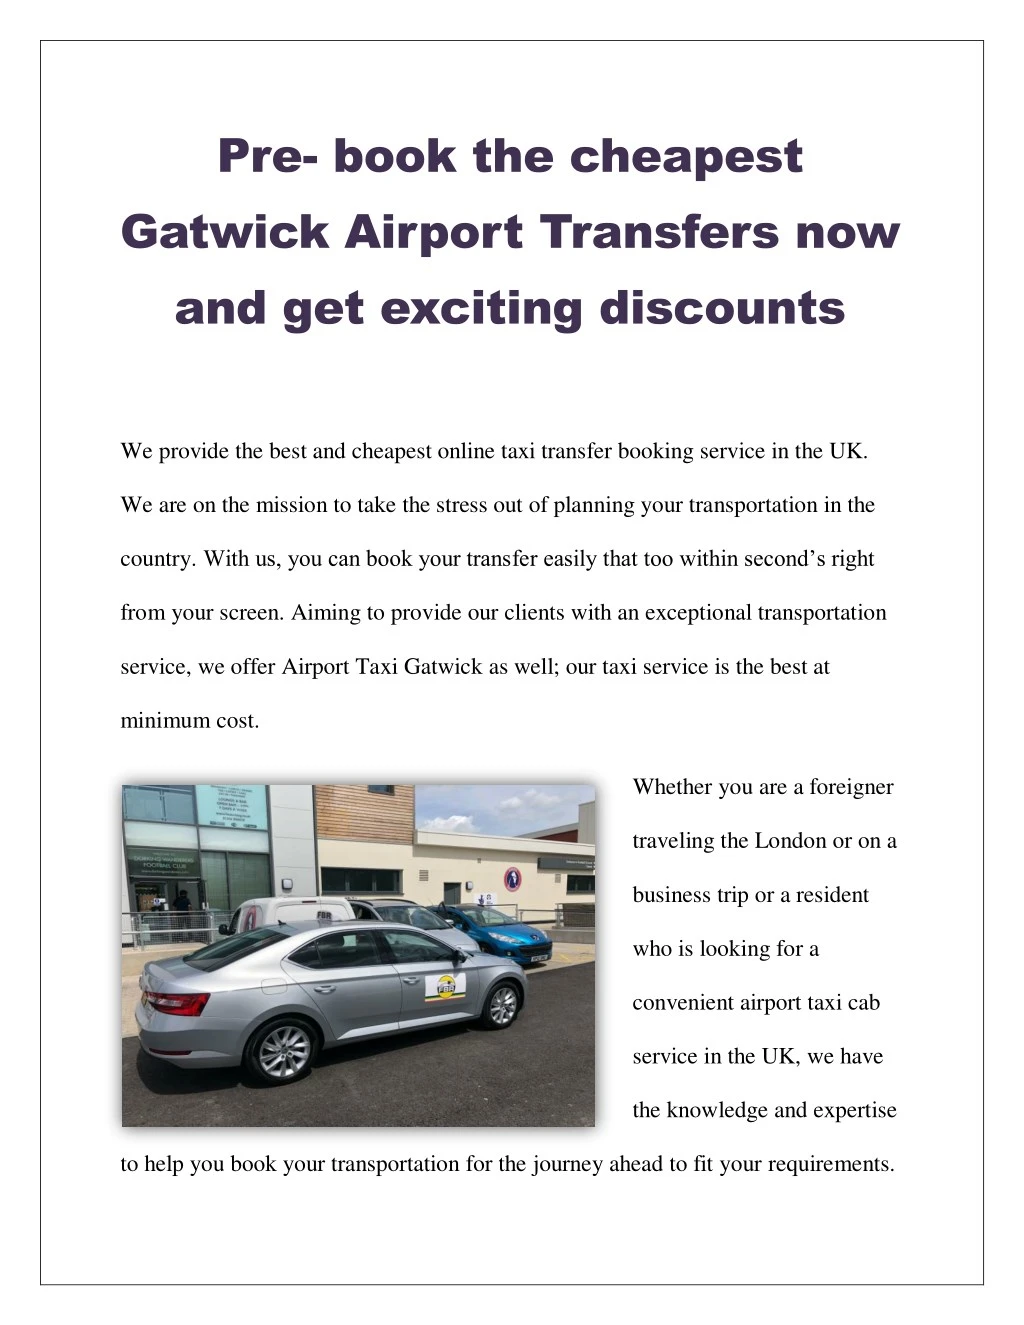 pre book the cheapest gatwick airport transfers